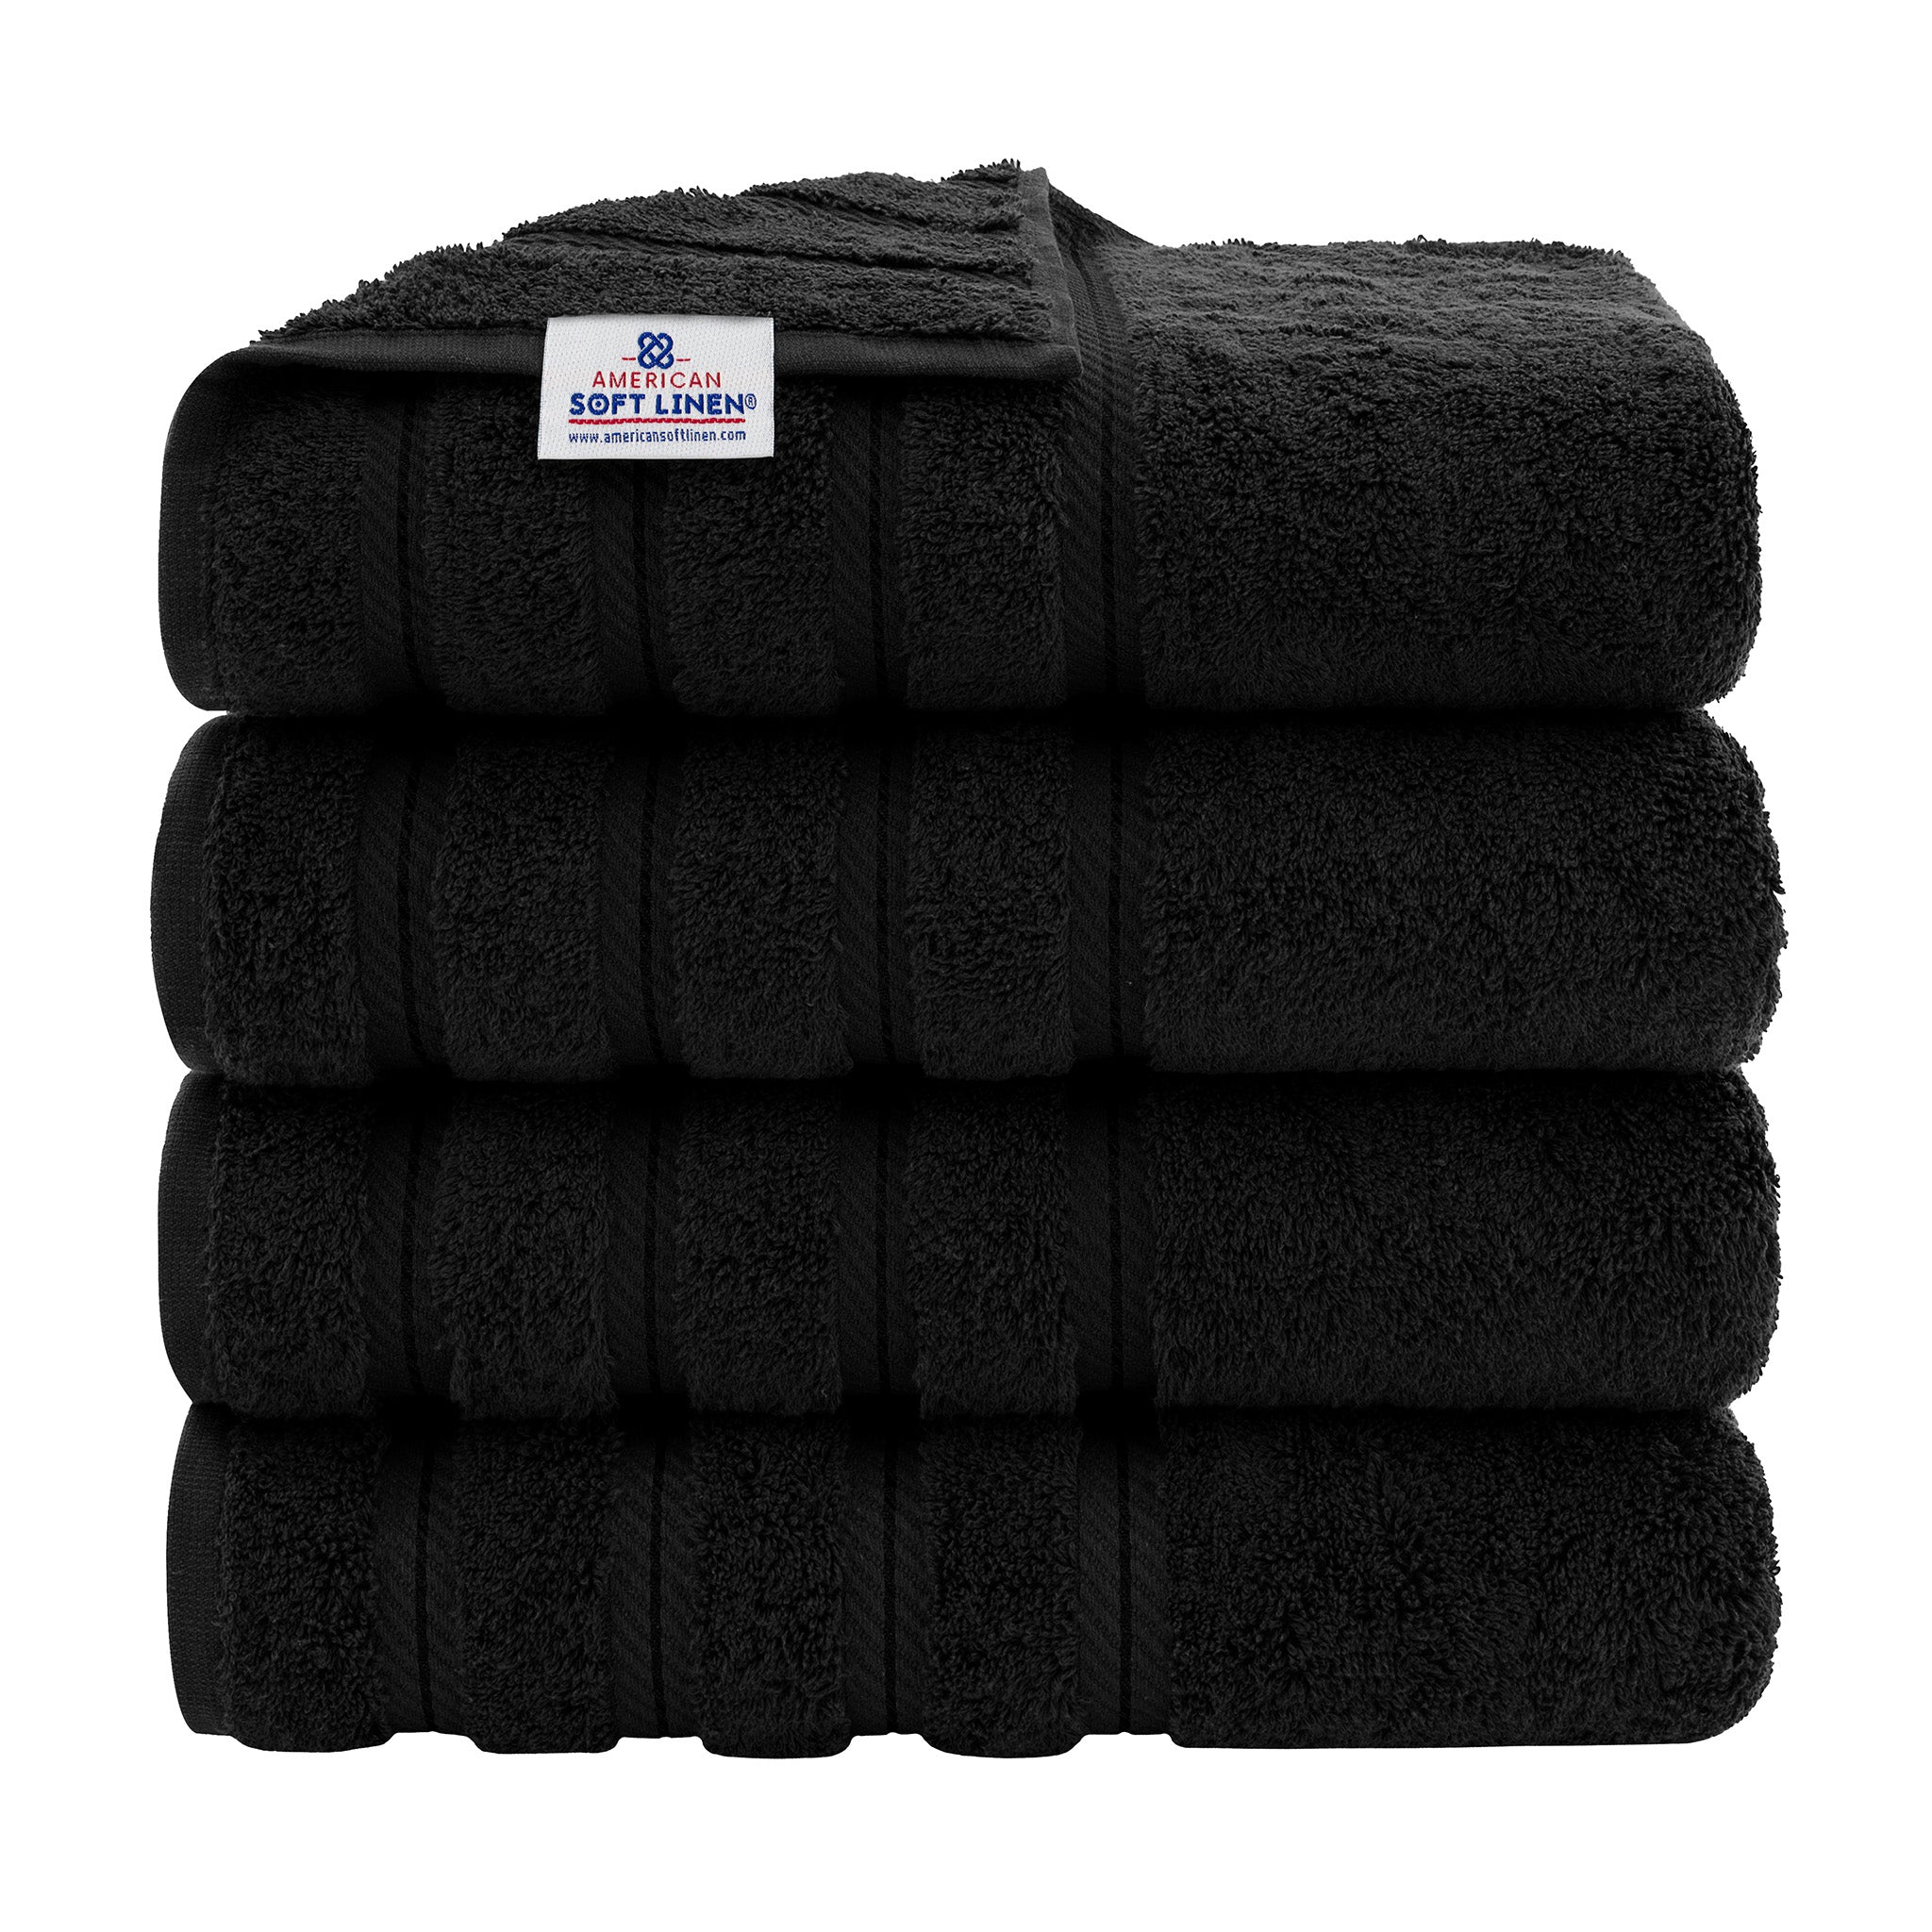 American Soft Linen 100% Turkish Cotton 4 Pack Bath Towel Set black-1